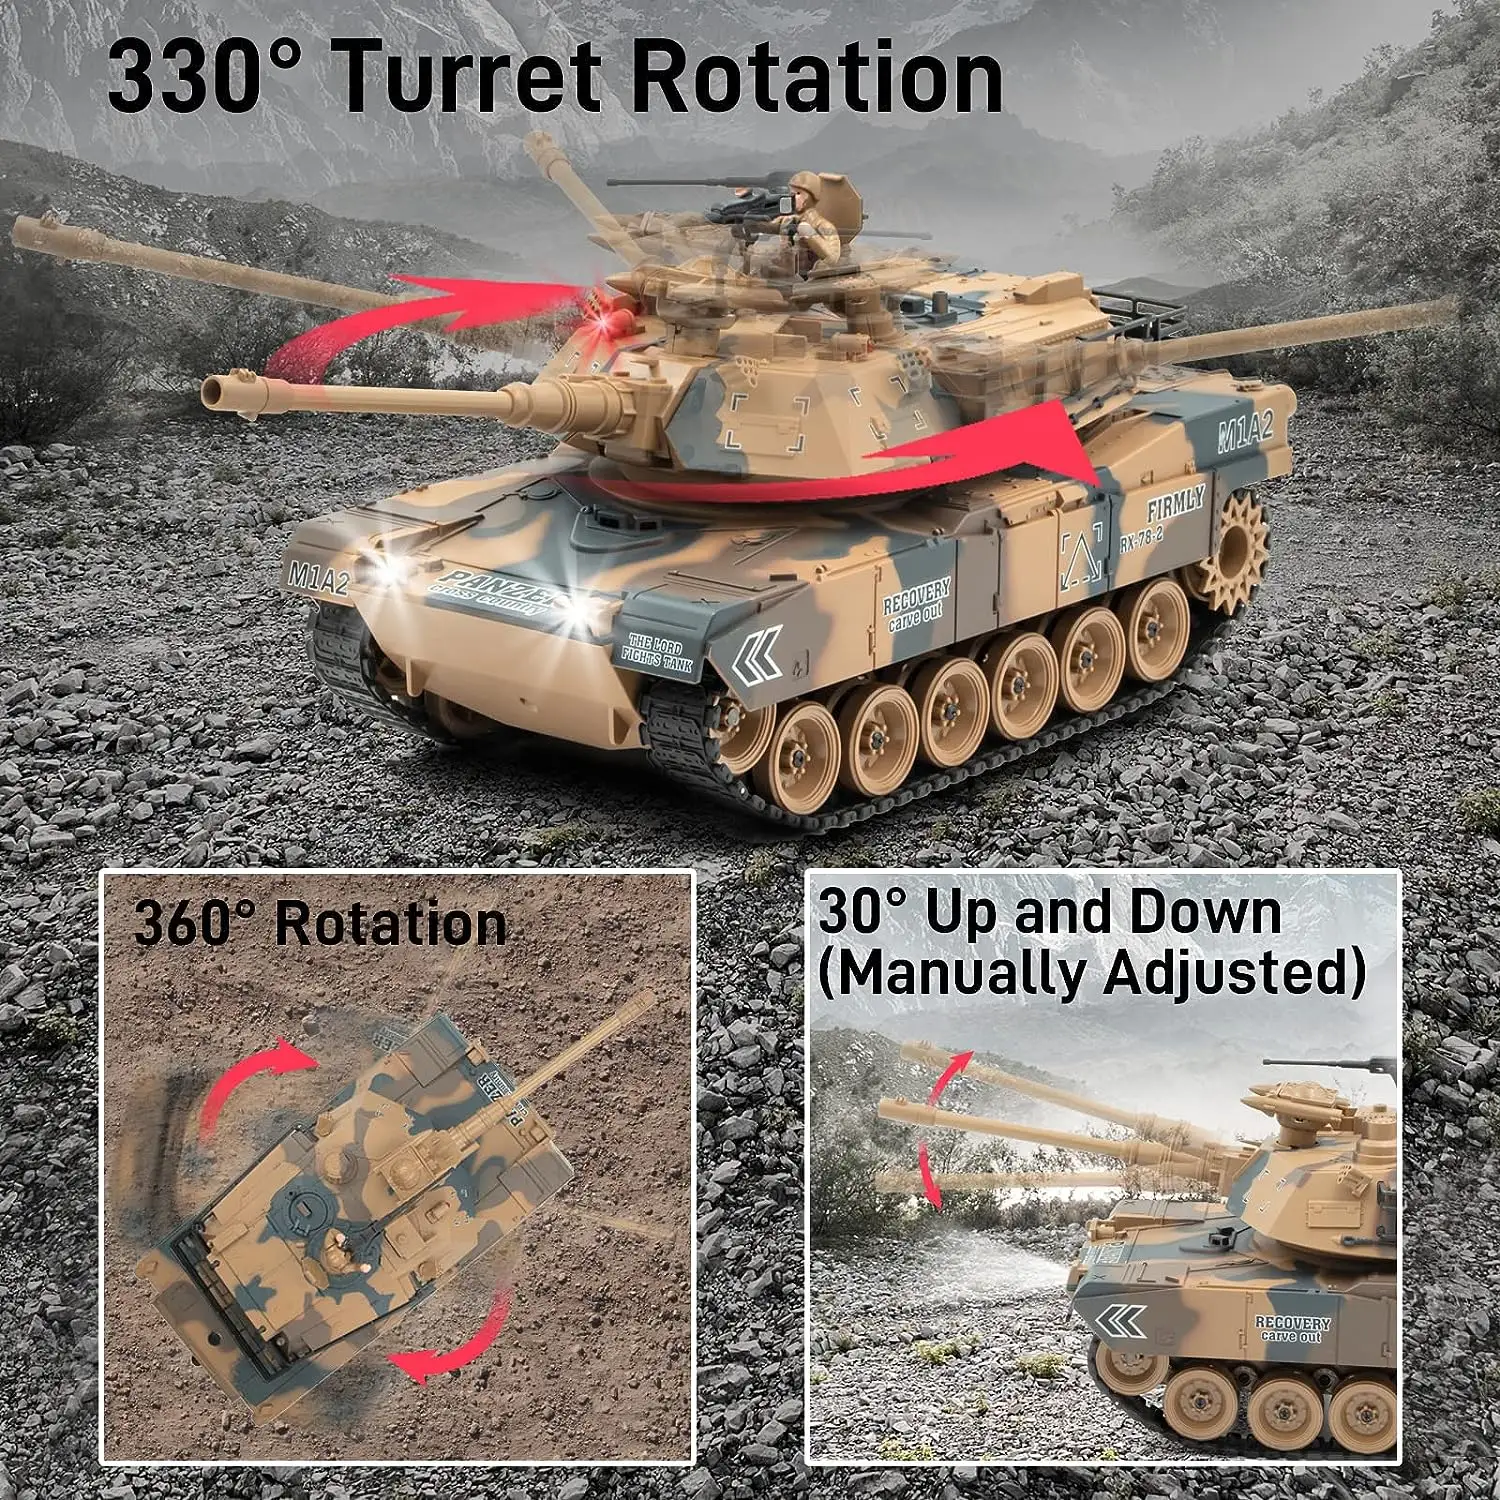 1/18 Hot Selling Abrams Model Rc Tank with Smoke+Sound+Shooting All Terrain Remote Control Crawler RC Tank Car M1A2 Tik Tok